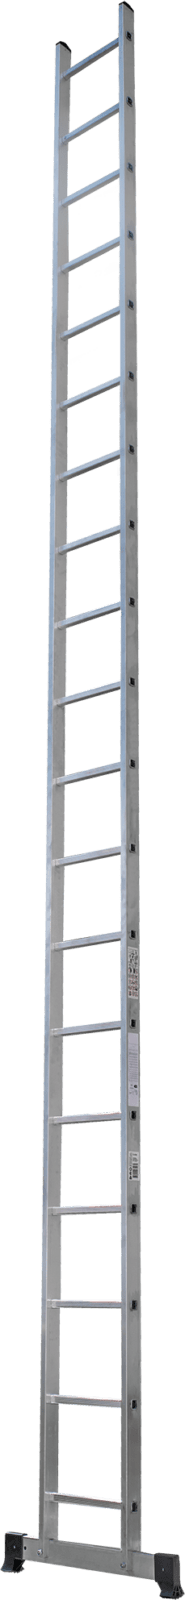 Лестница алюминиевая приставная NV1210 артикул 1210119